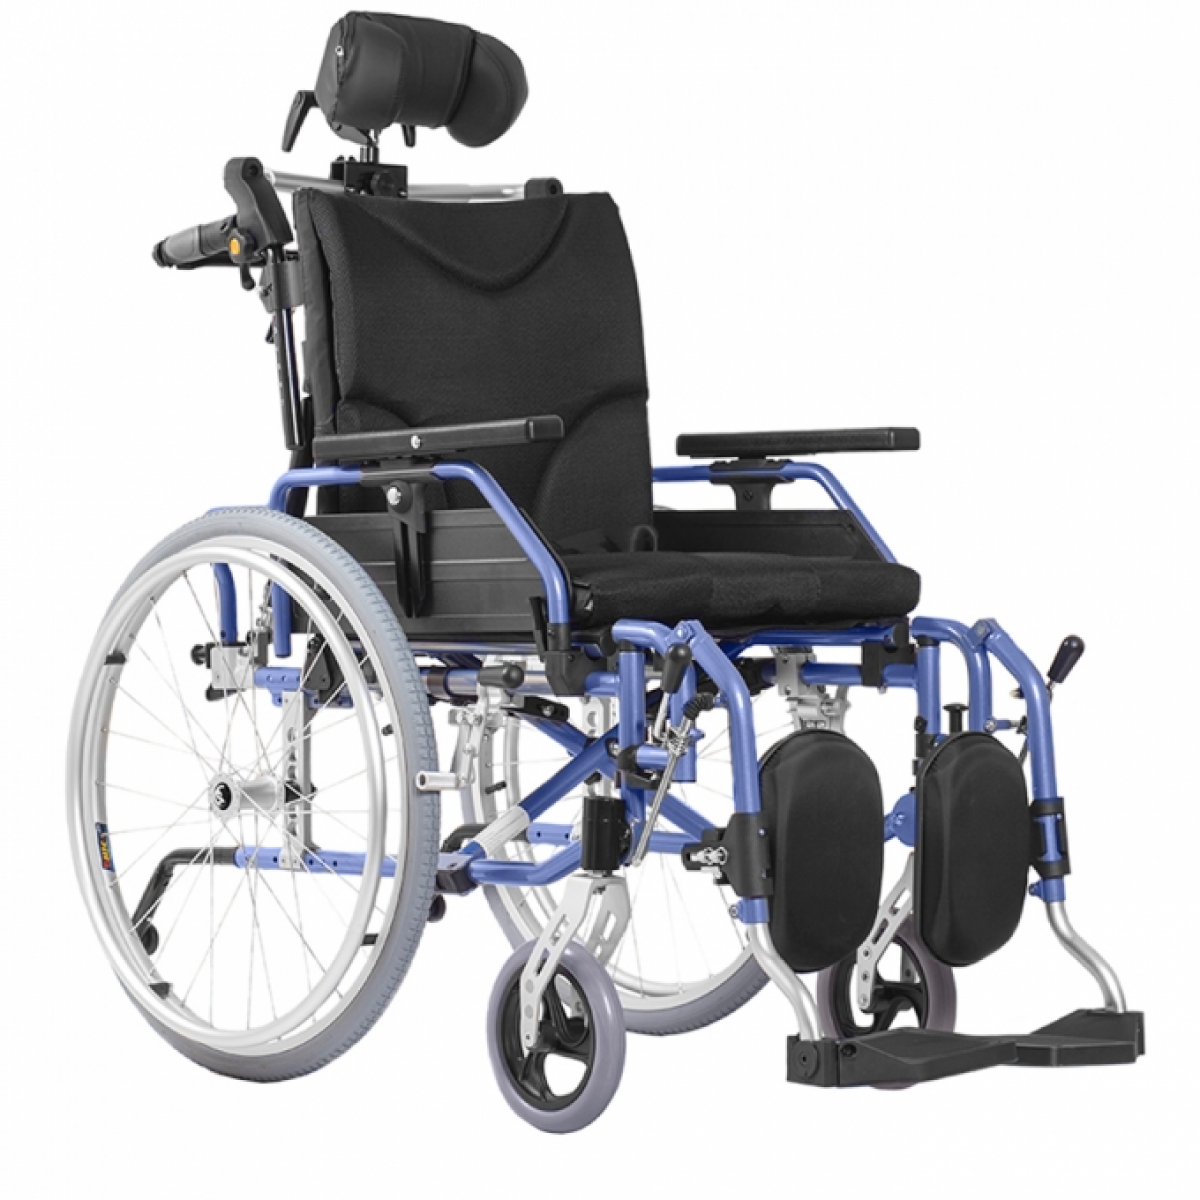 Коляска ортоника цена. Кресло коляска Ортоника. Ортоника инвалидные коляски. Инвалидное кресло Ортоника. Коляска инвалидная Ergoforce е 0812.